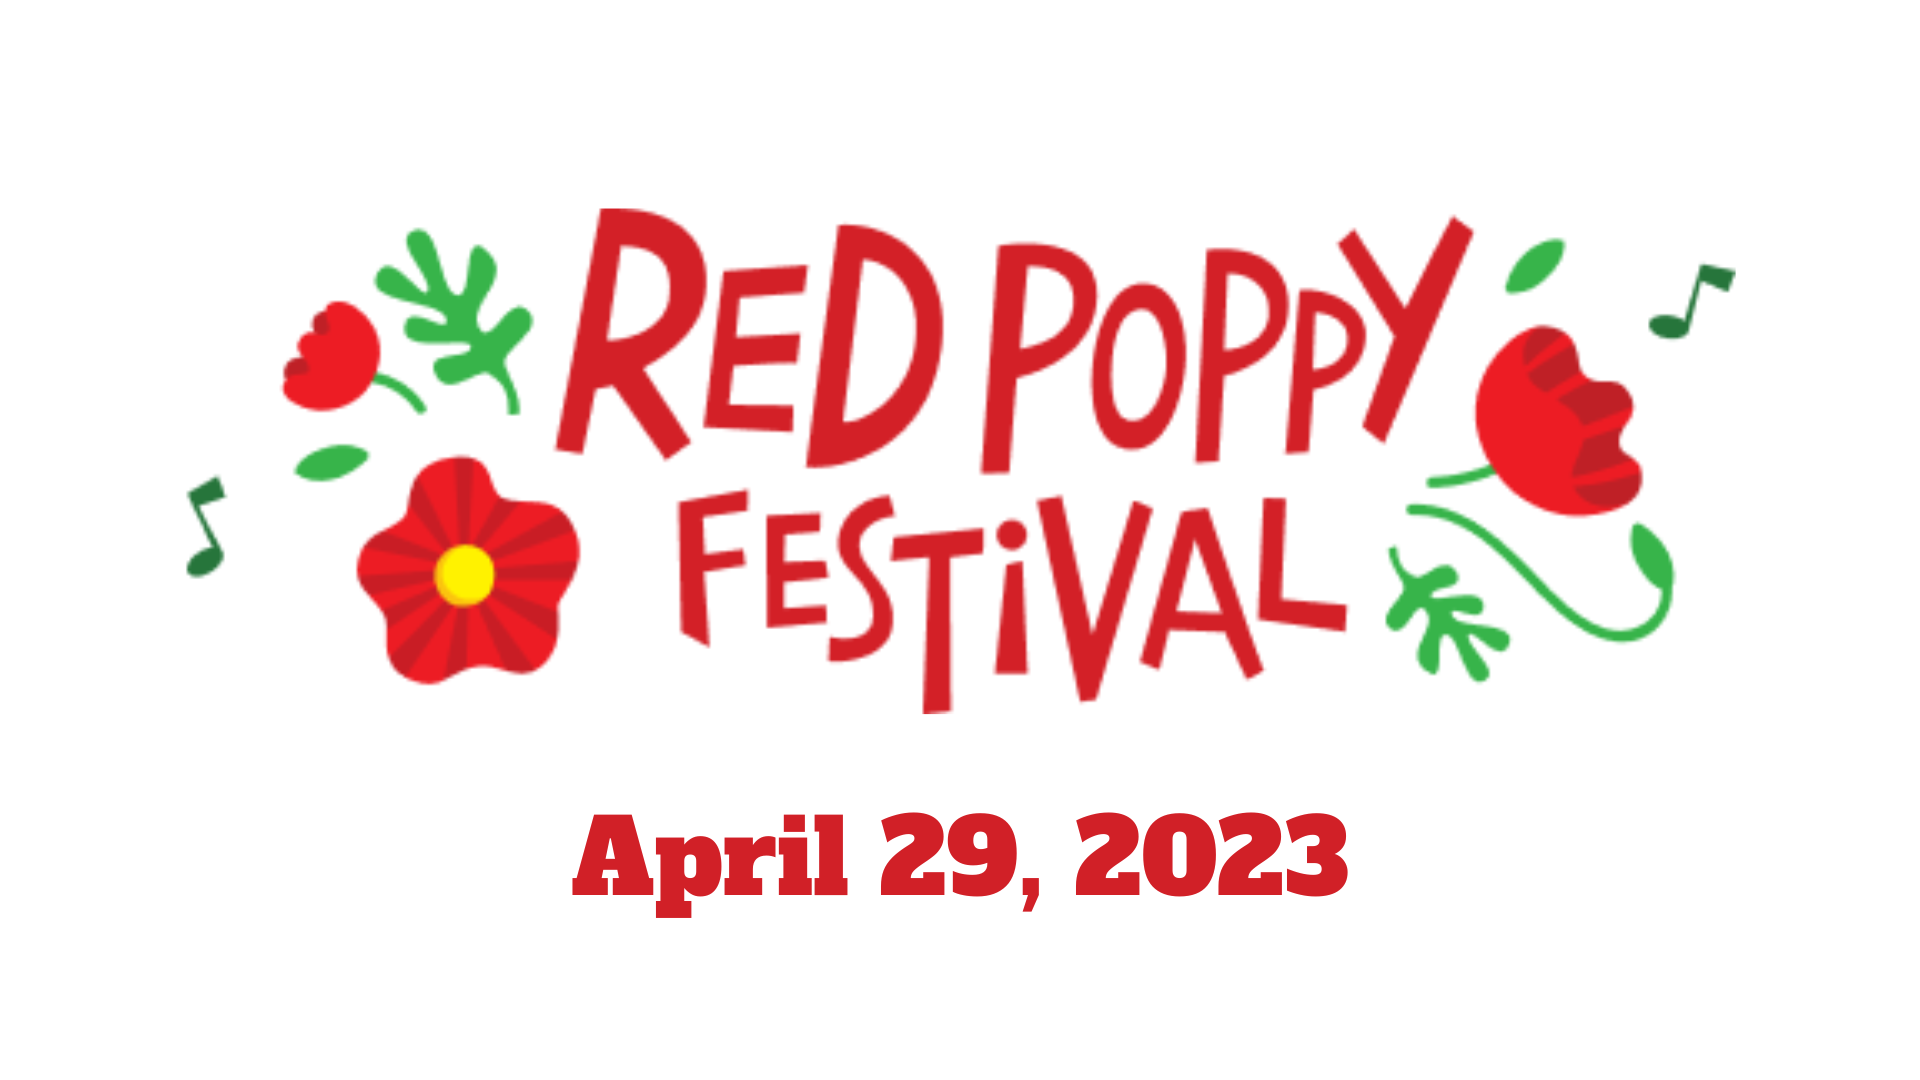 Red Poppy Festival Parade April 29, 2023